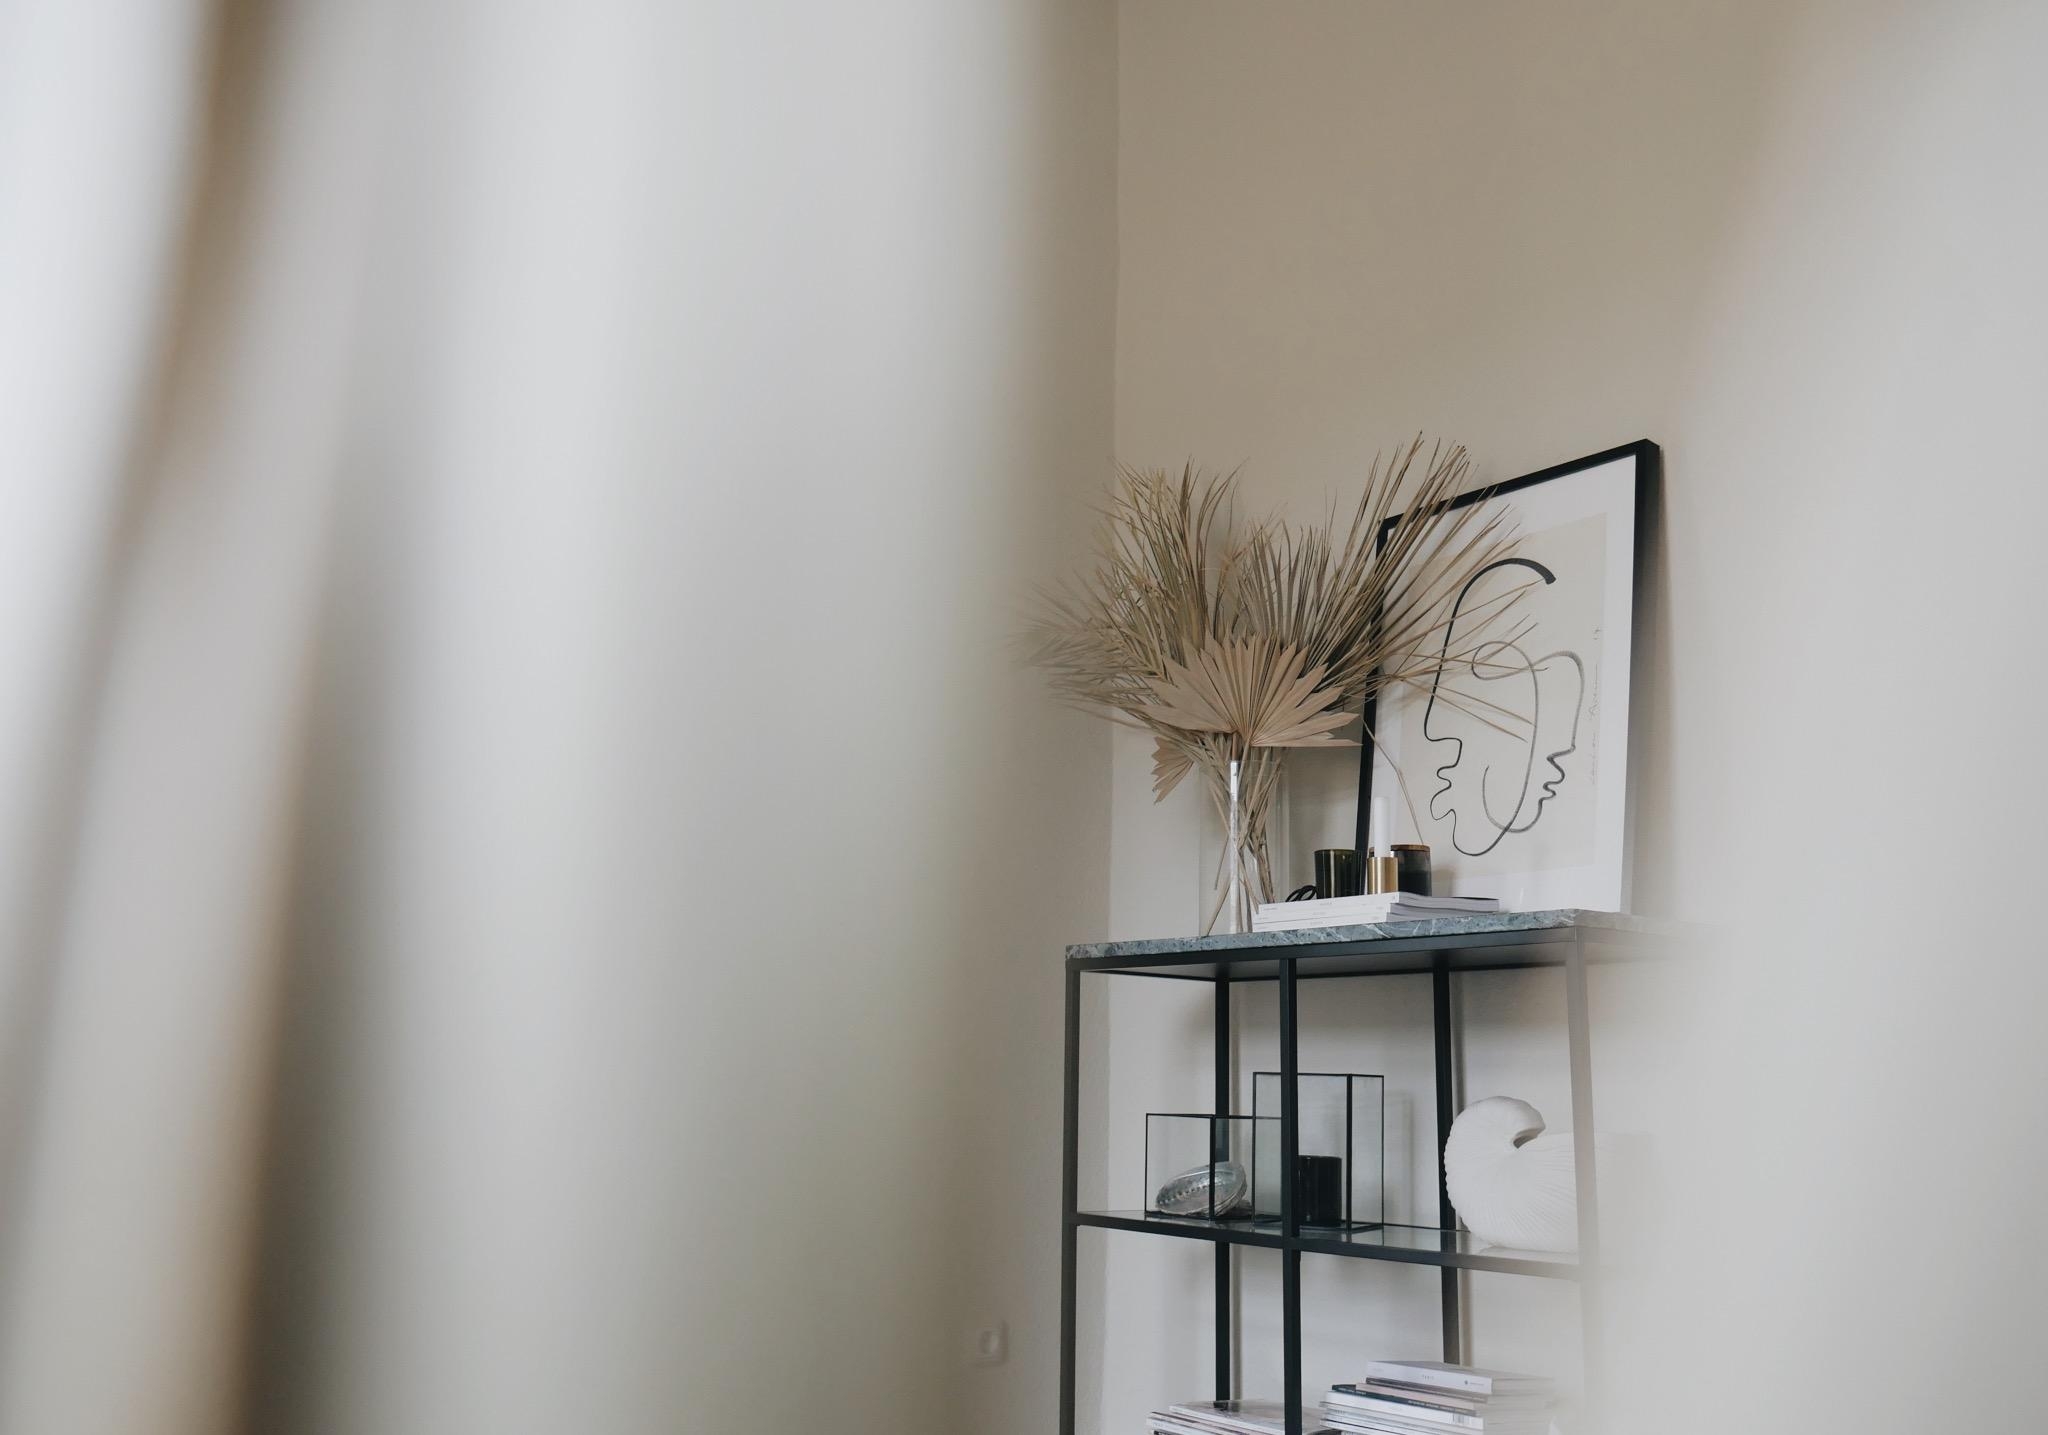 #interiordetails #palmleaves #bouquet #interiordesign #homedecor #livingroom #shelfie #couchstyle